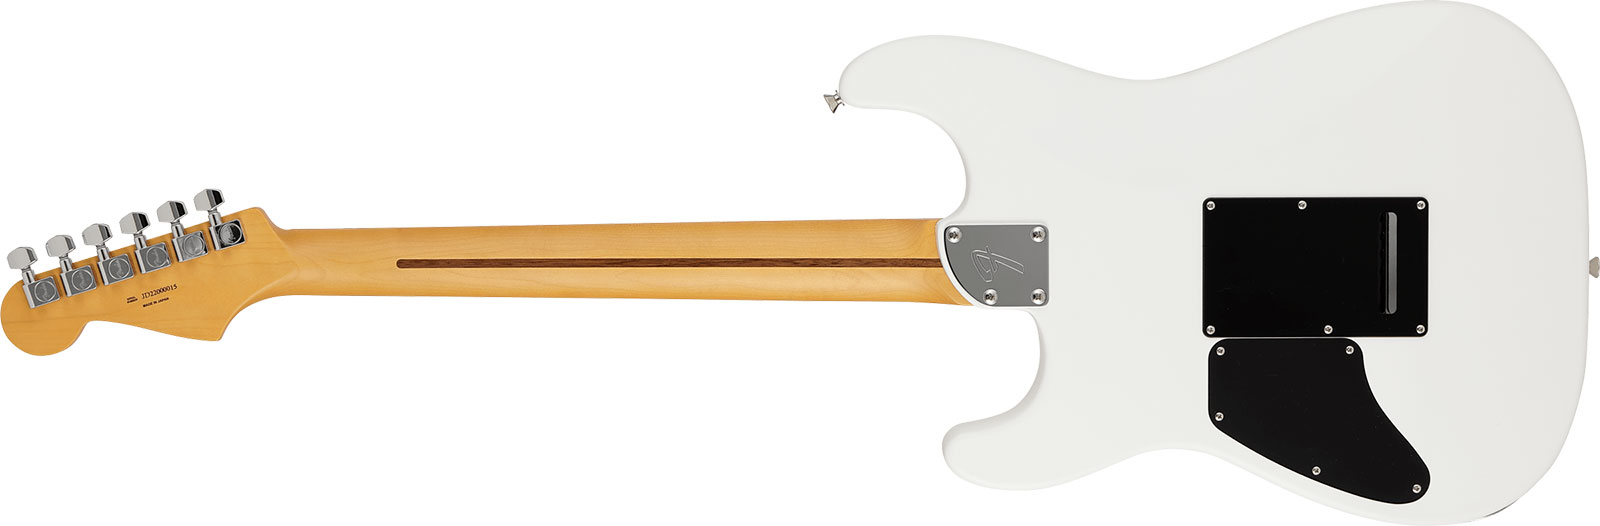 Fender Strat Elemental Mij Jap 2h Trem Rw - Nimbus White - Guitarra eléctrica con forma de str. - Variation 1